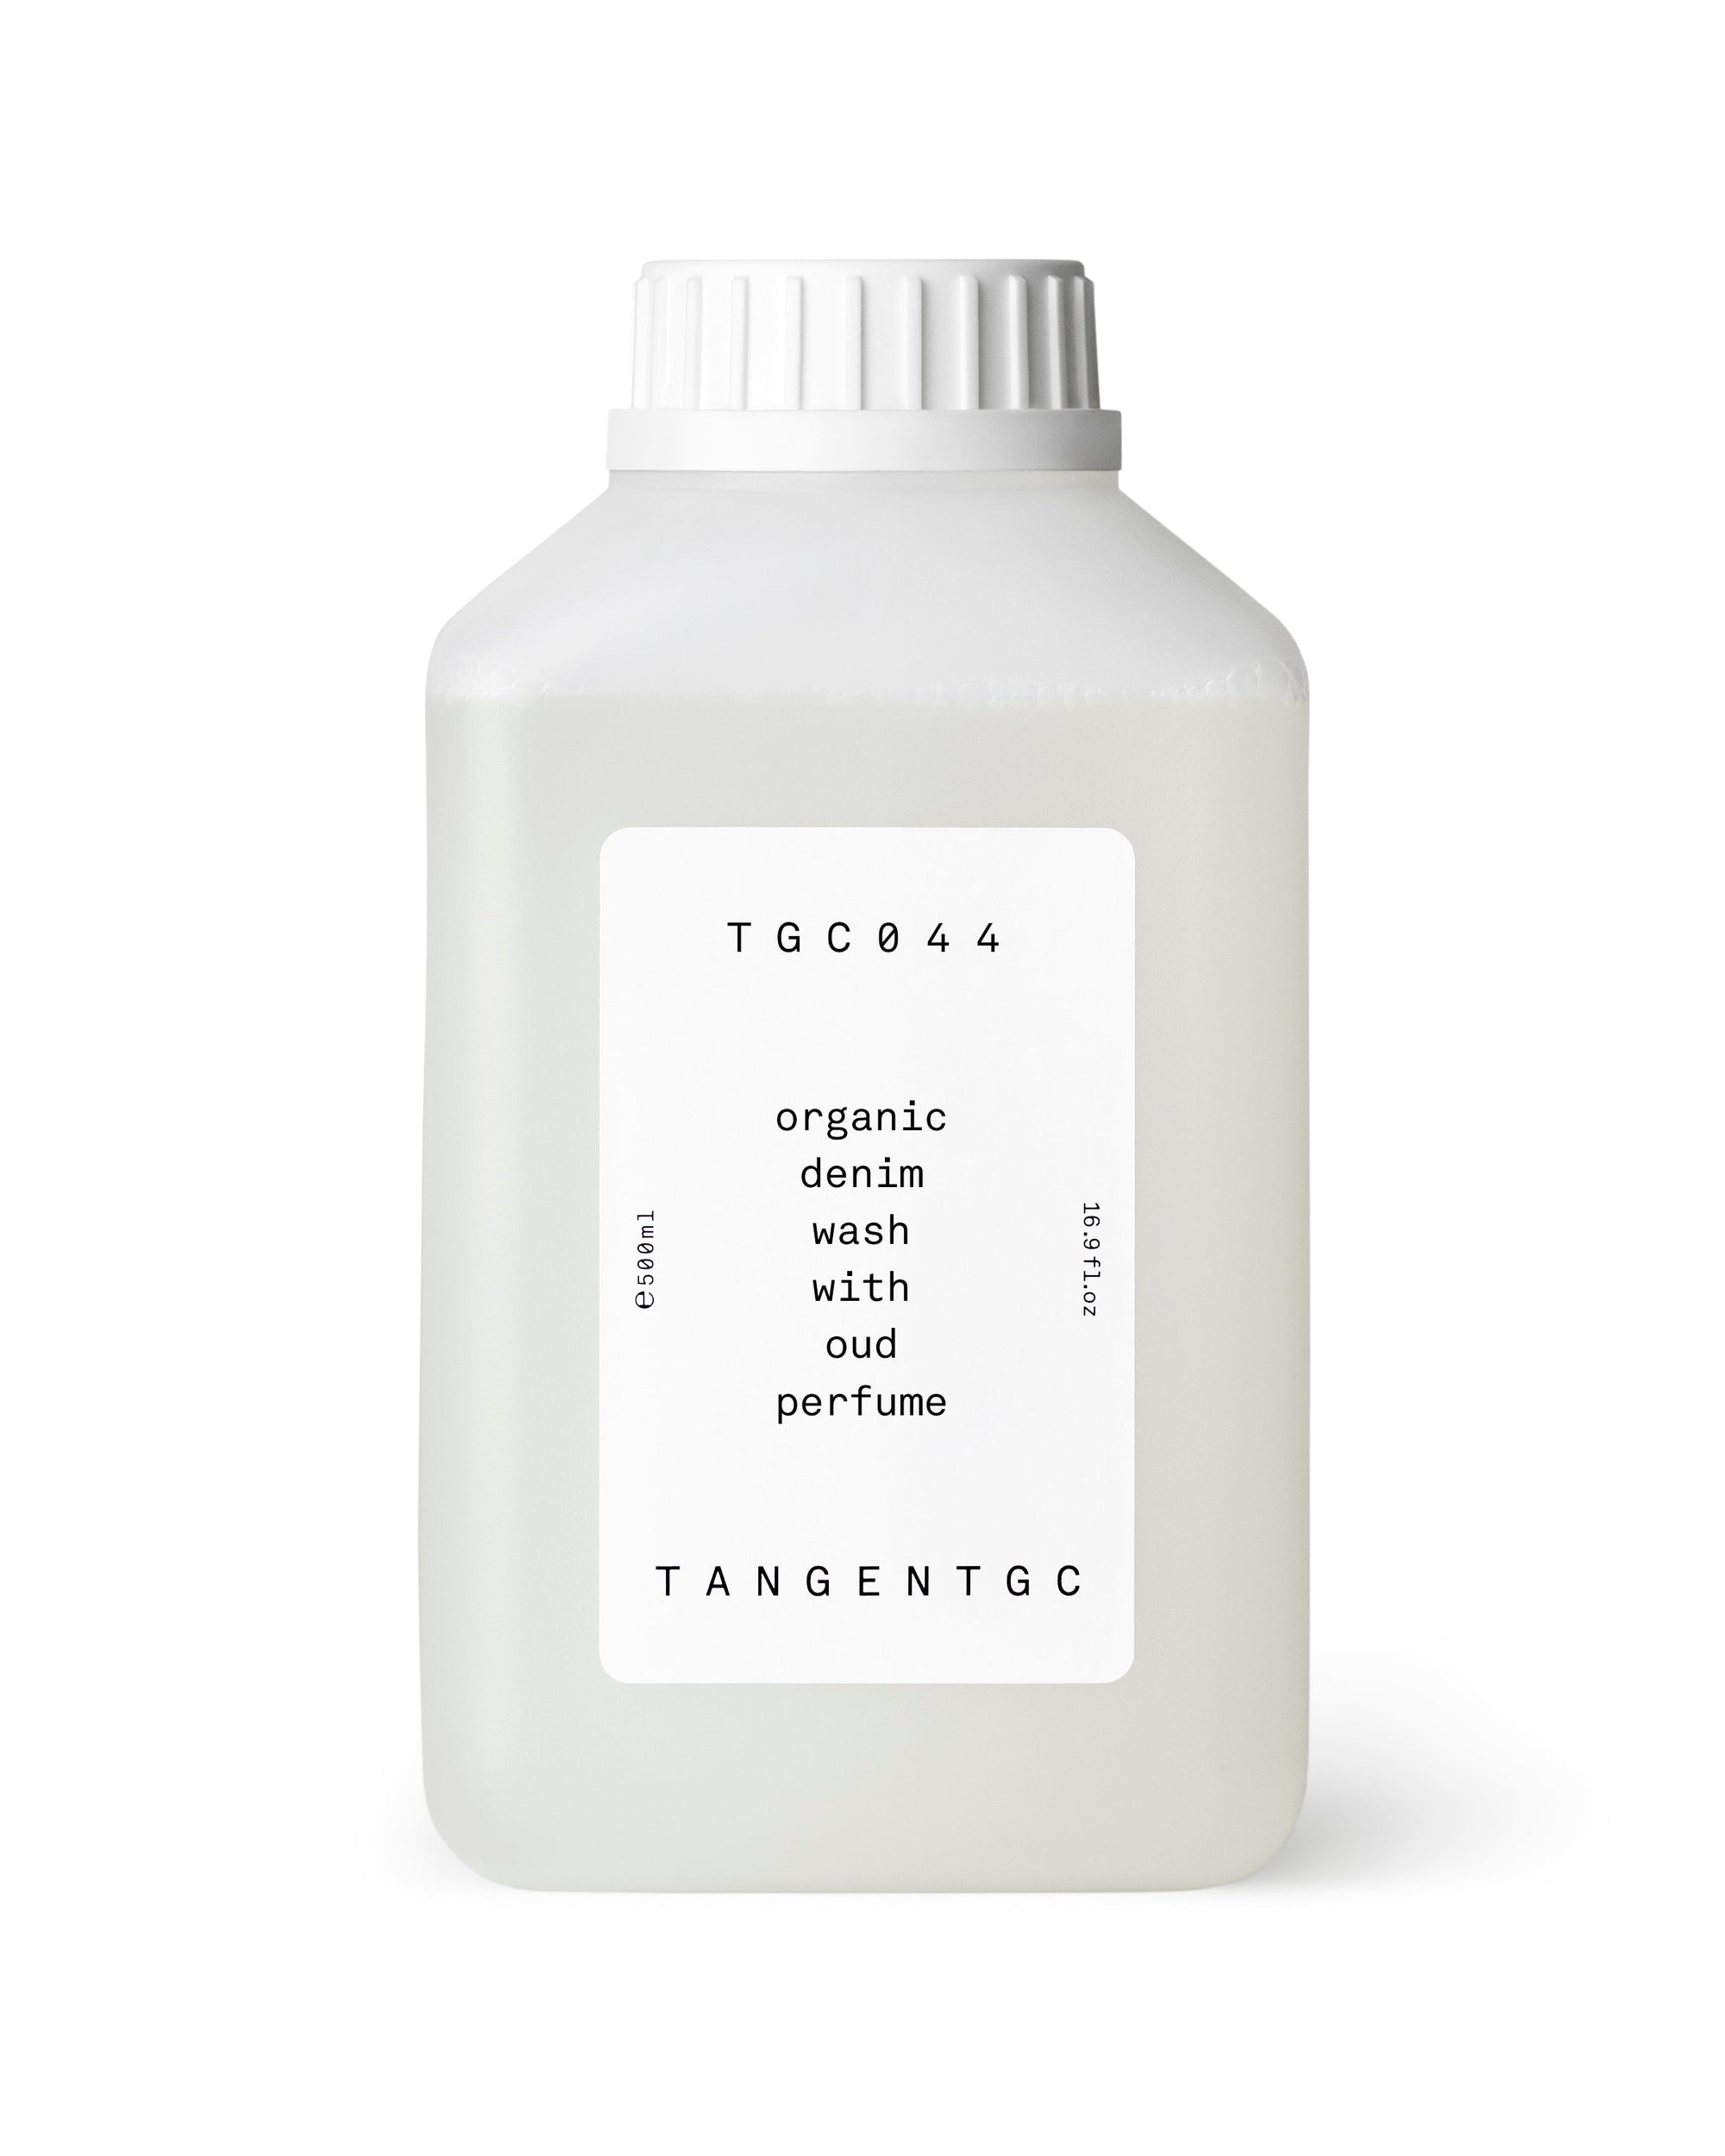 Tangent Organic Denim Wash 500 ml - Oud - Soap & Water Everyday